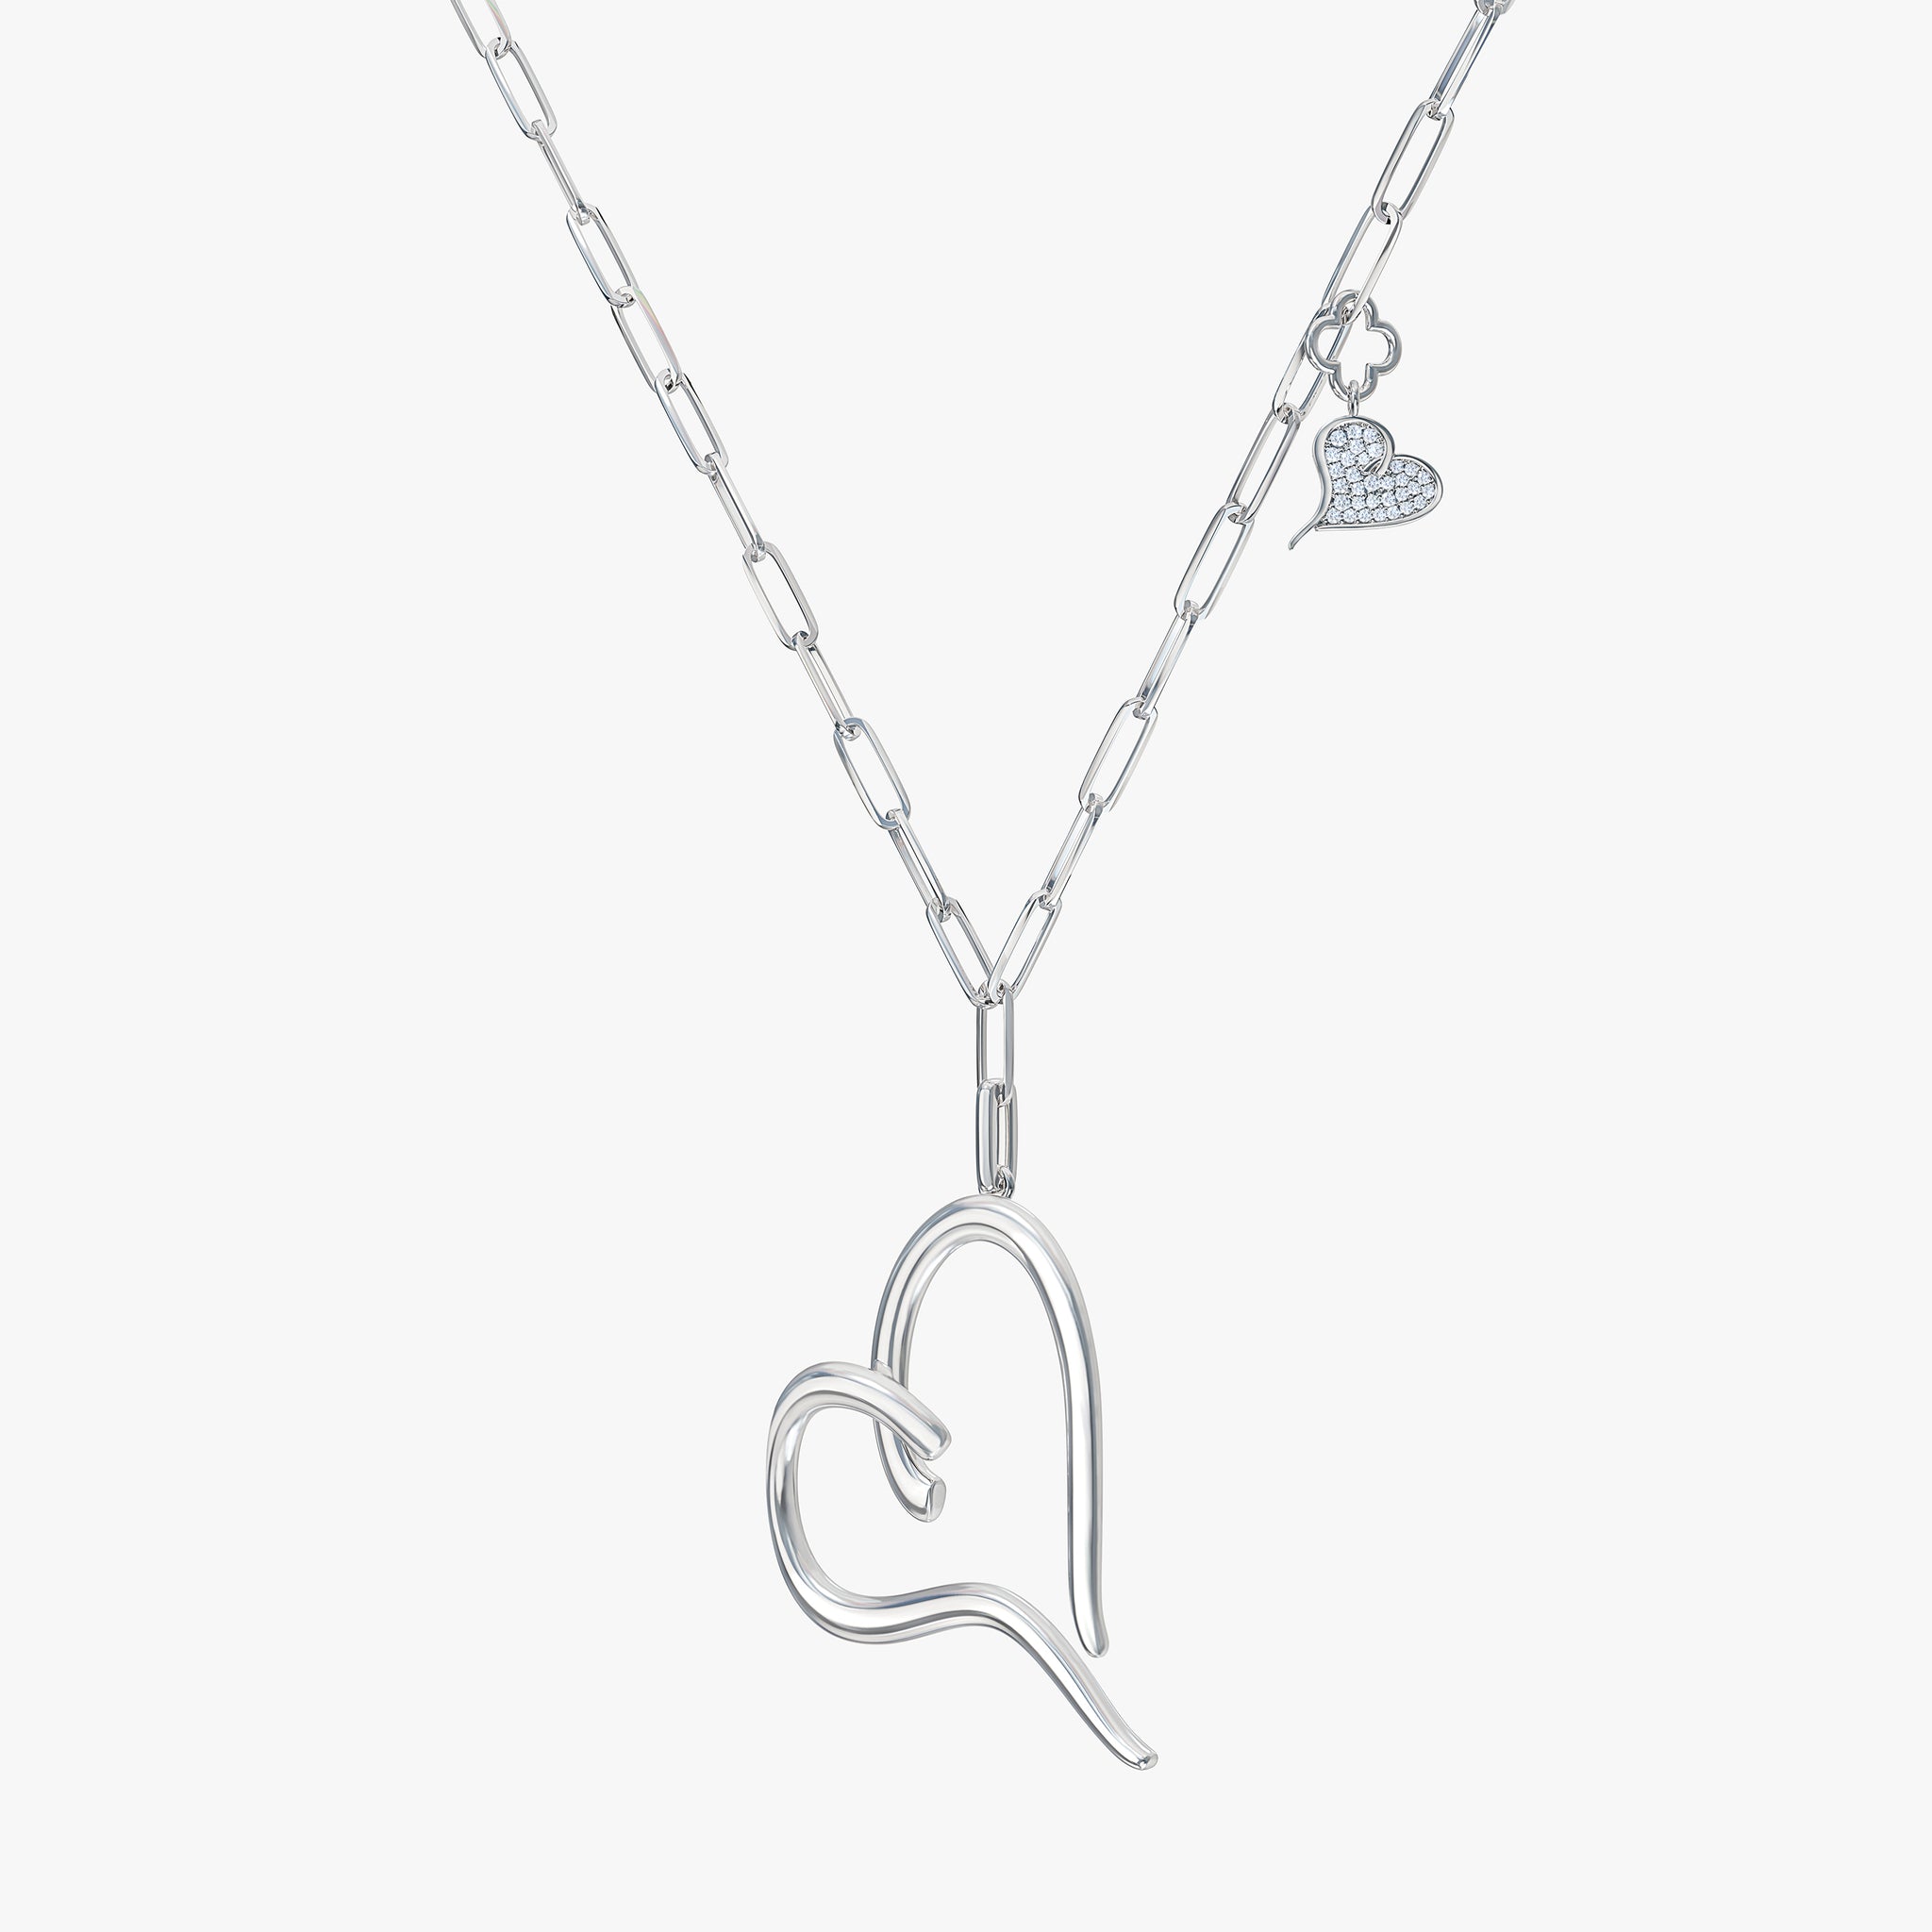 J'EVAR 14KT White Gold Heart Charm ALTR Lab Grown Diamond Necklace Perspective View